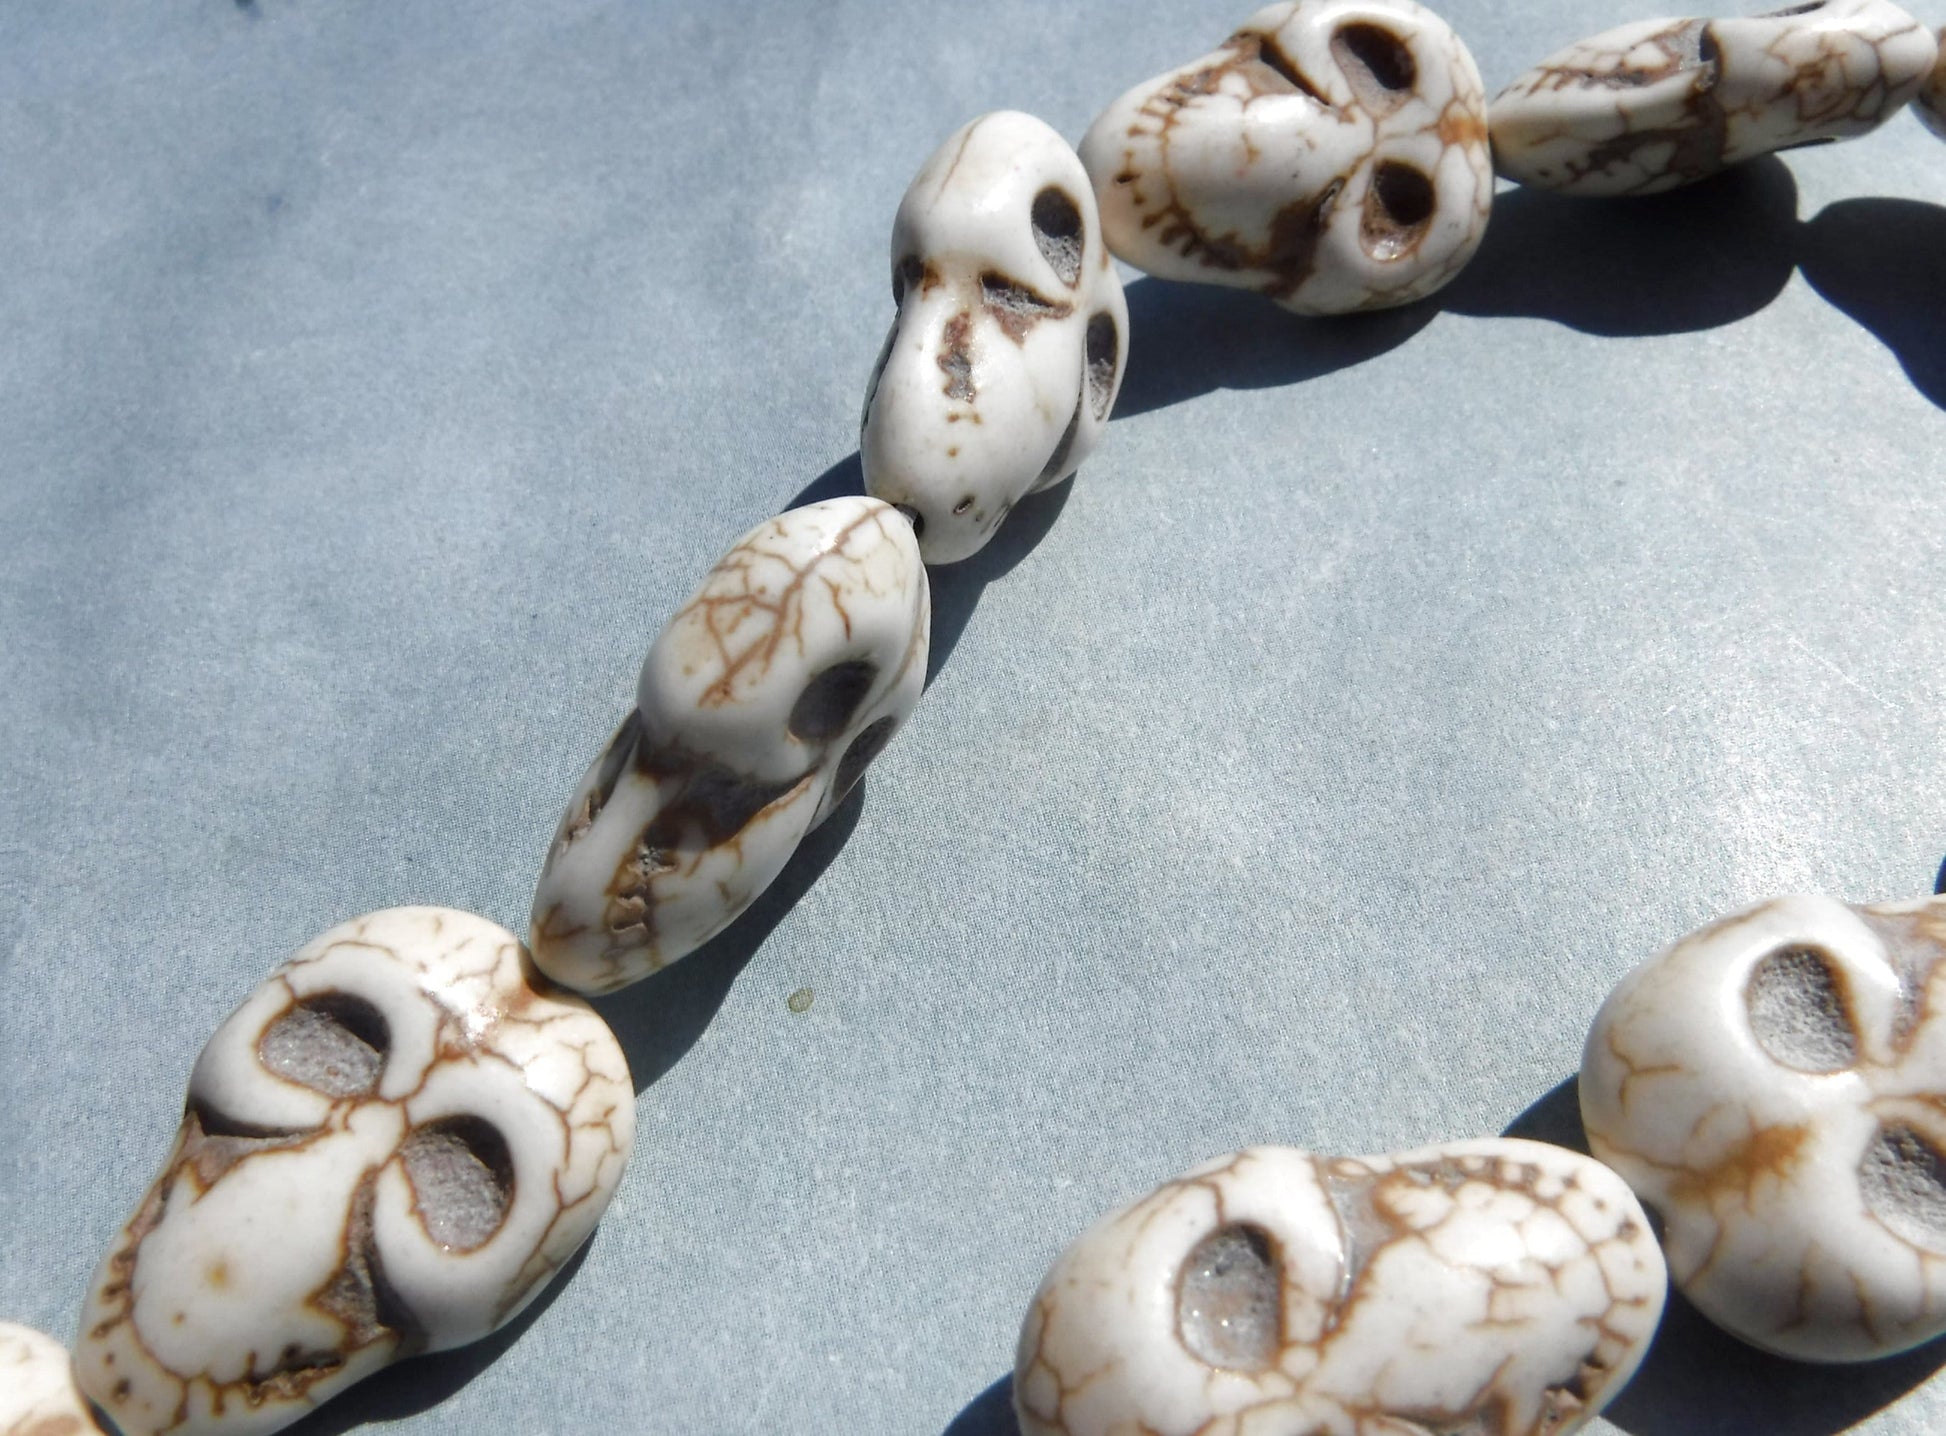 Skull Beads - 21mmx 15mm - Approximately 19 Stone Beads - Use for Mosaics